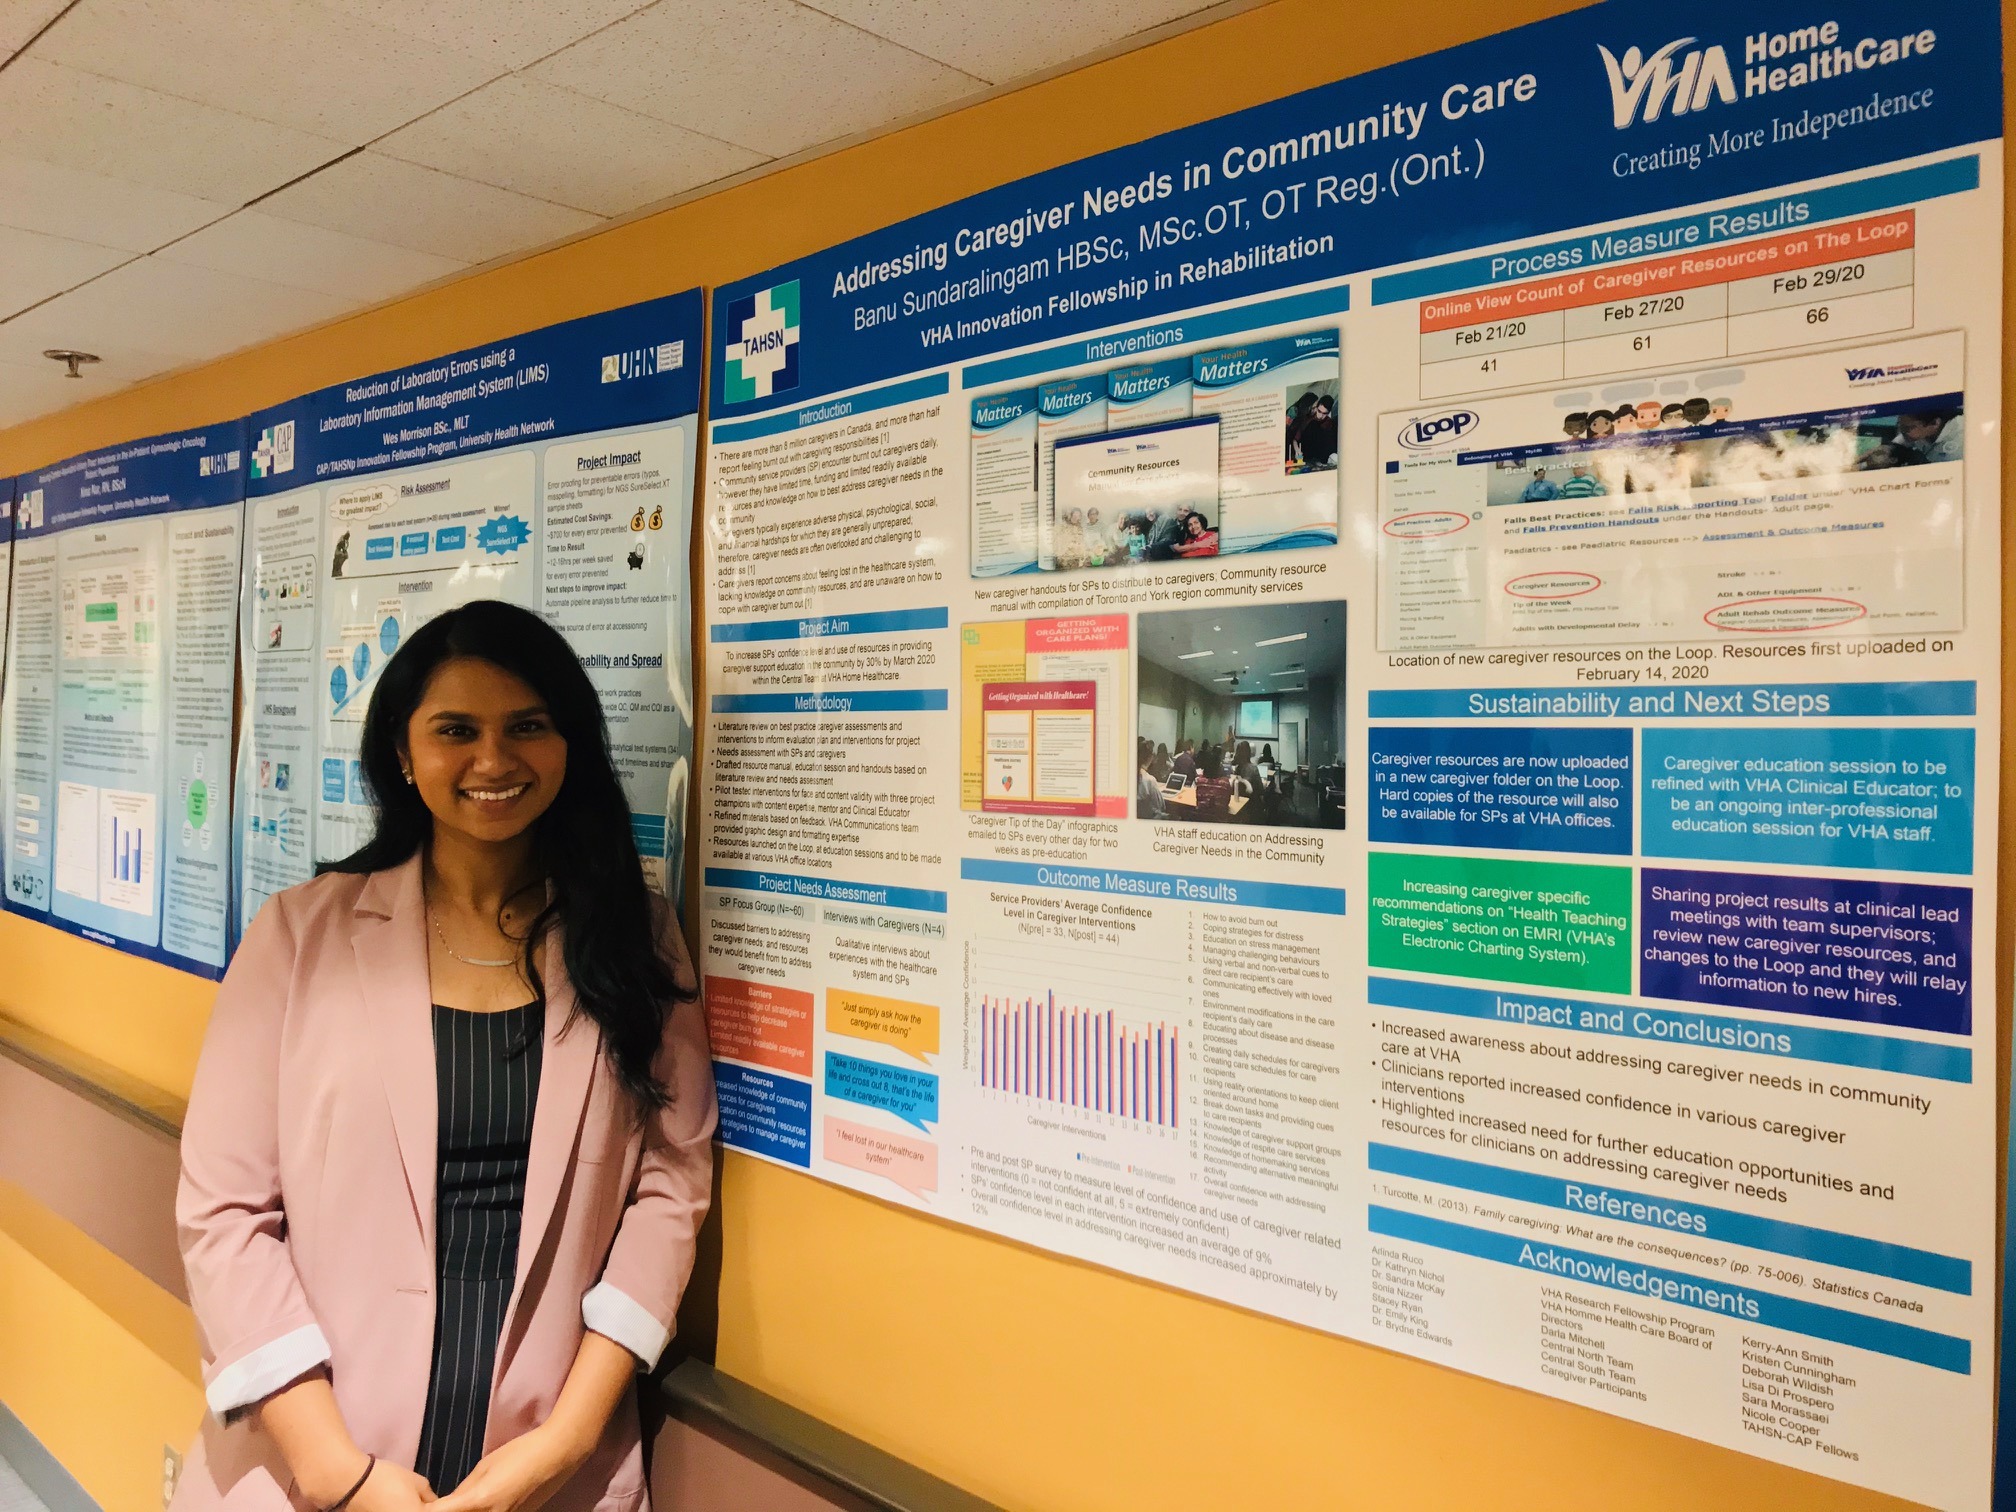 2019 Research Fellowship winner, Banu Sundaralingam, with her poster